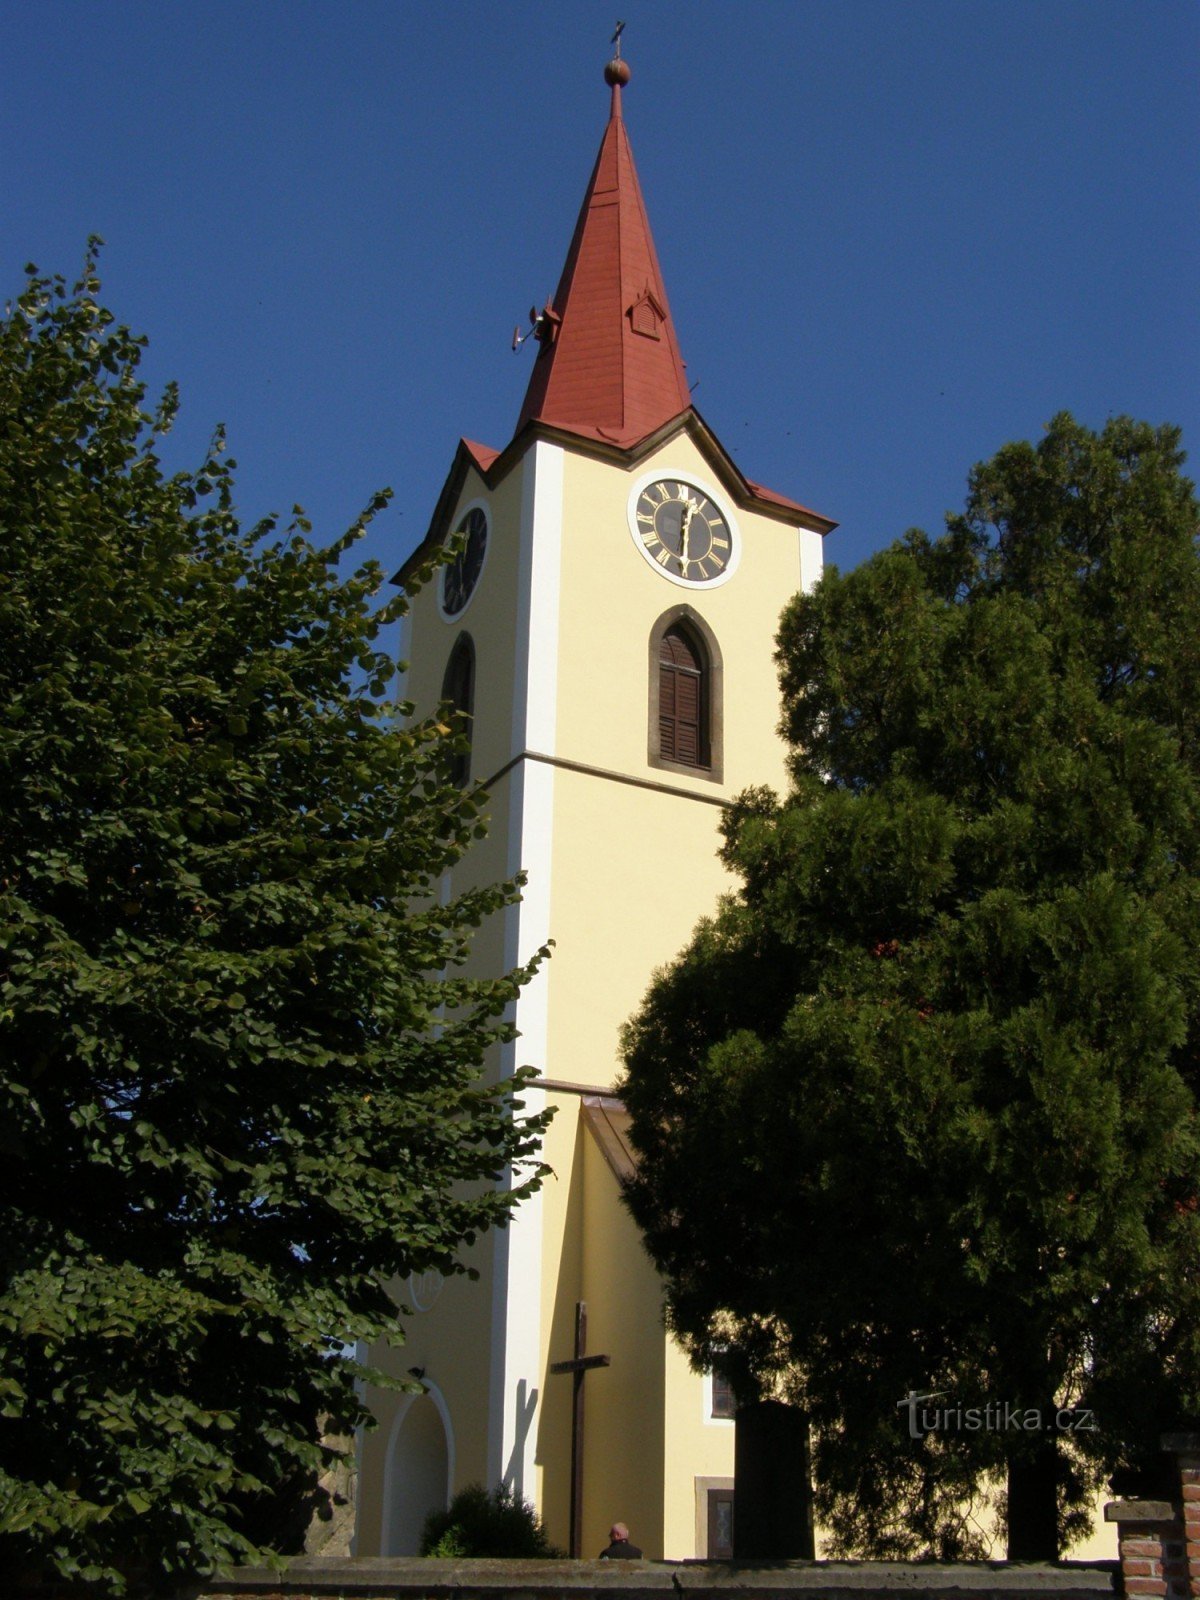 Jasenná - Biserica Sf. Gheorghe